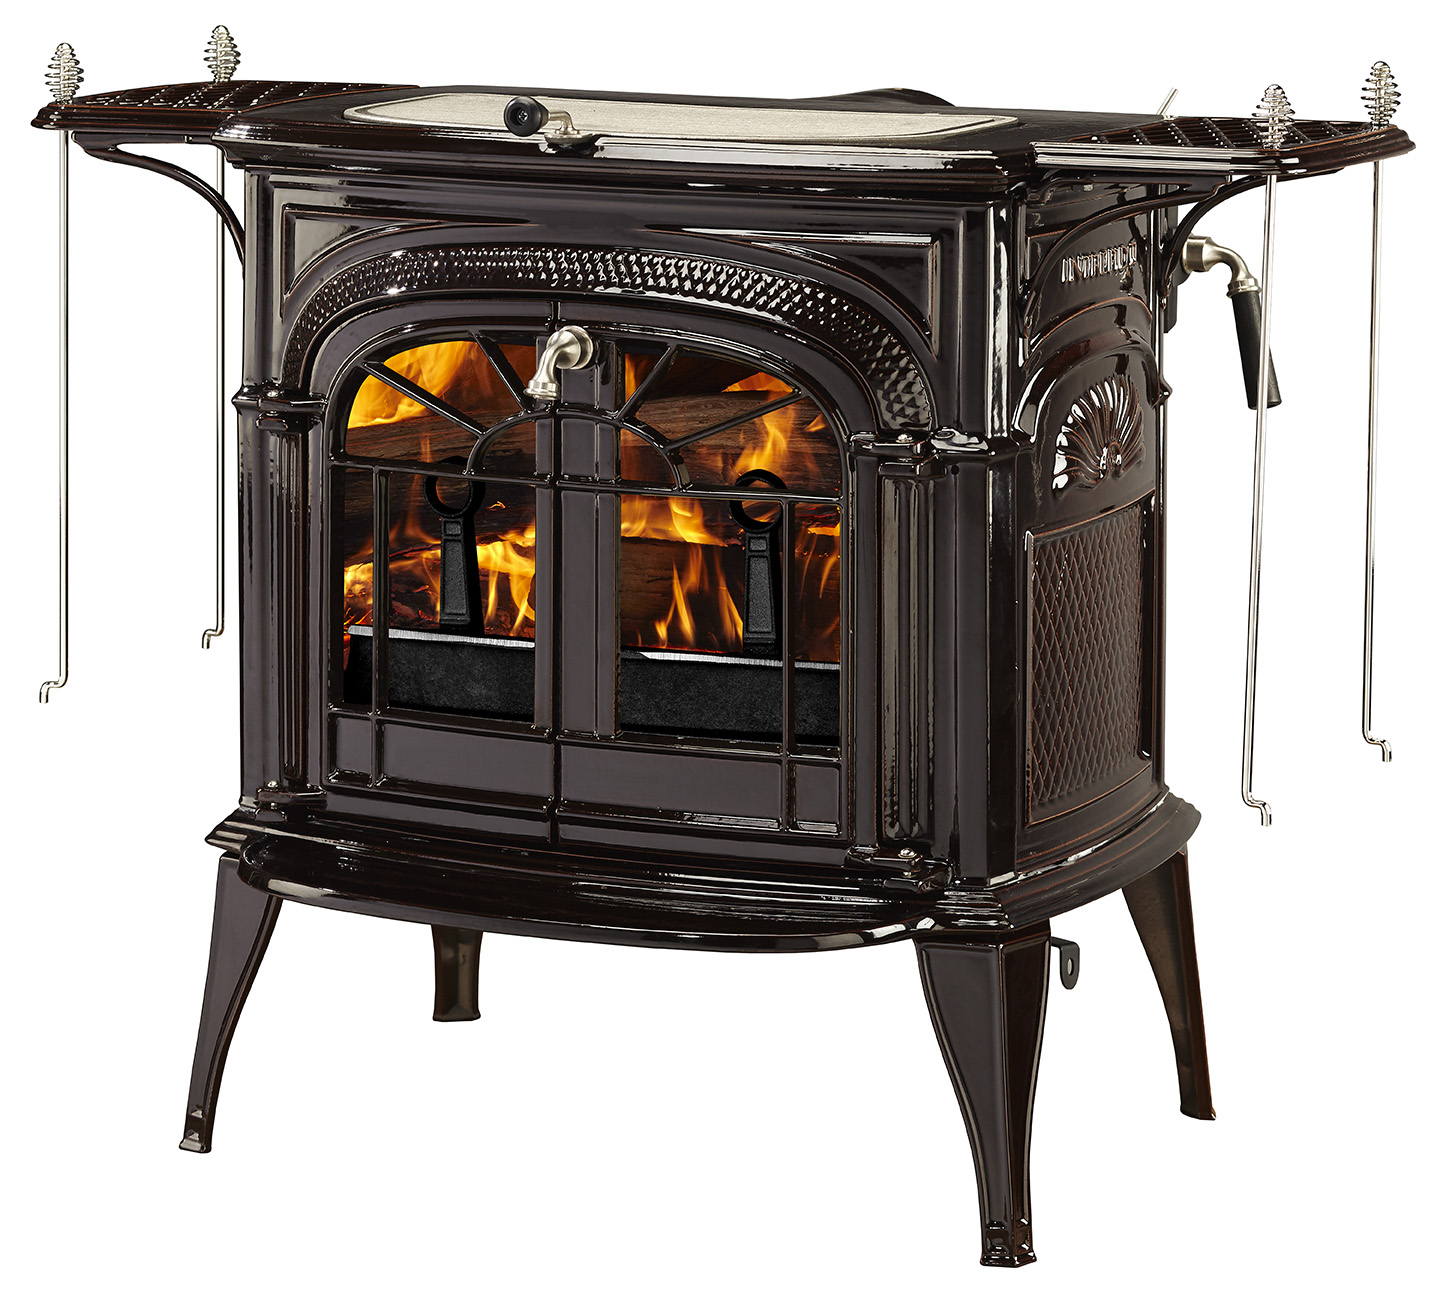 vermont-castings-intrepid-flexburn-wood-burning-stove-colorado-hearth